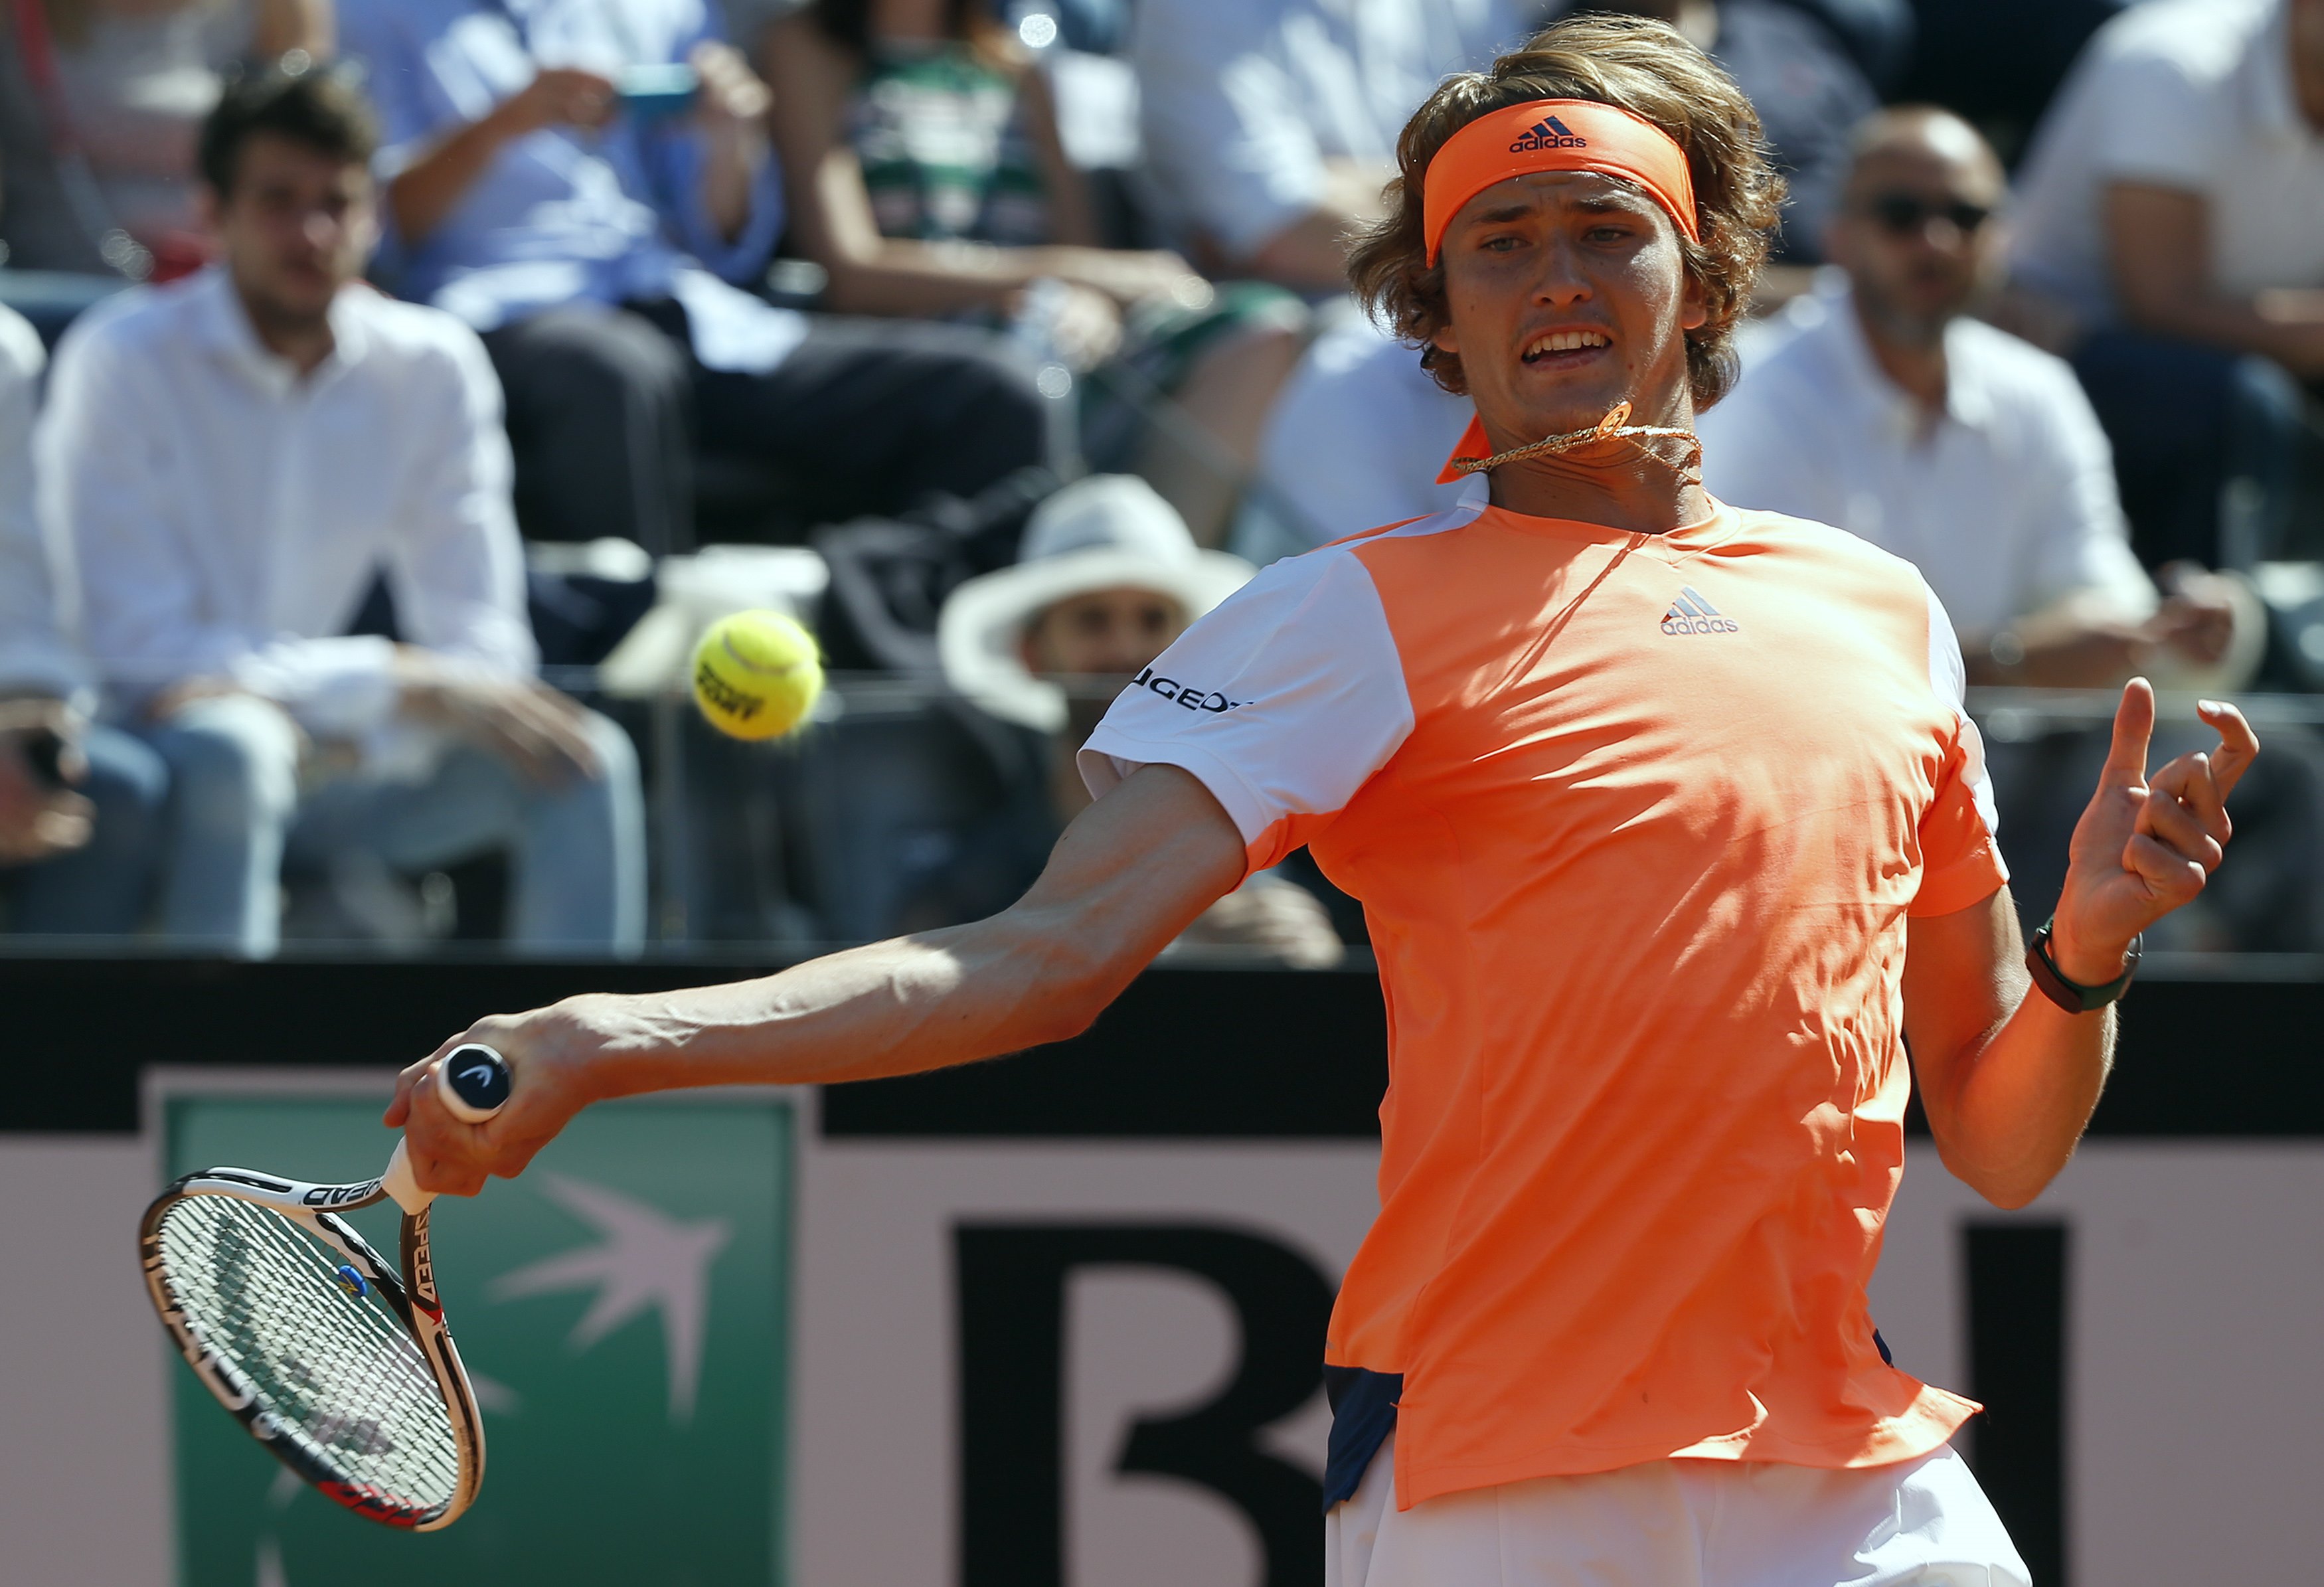 Tennis: Zverev downplays French Open chances despite Rome victory